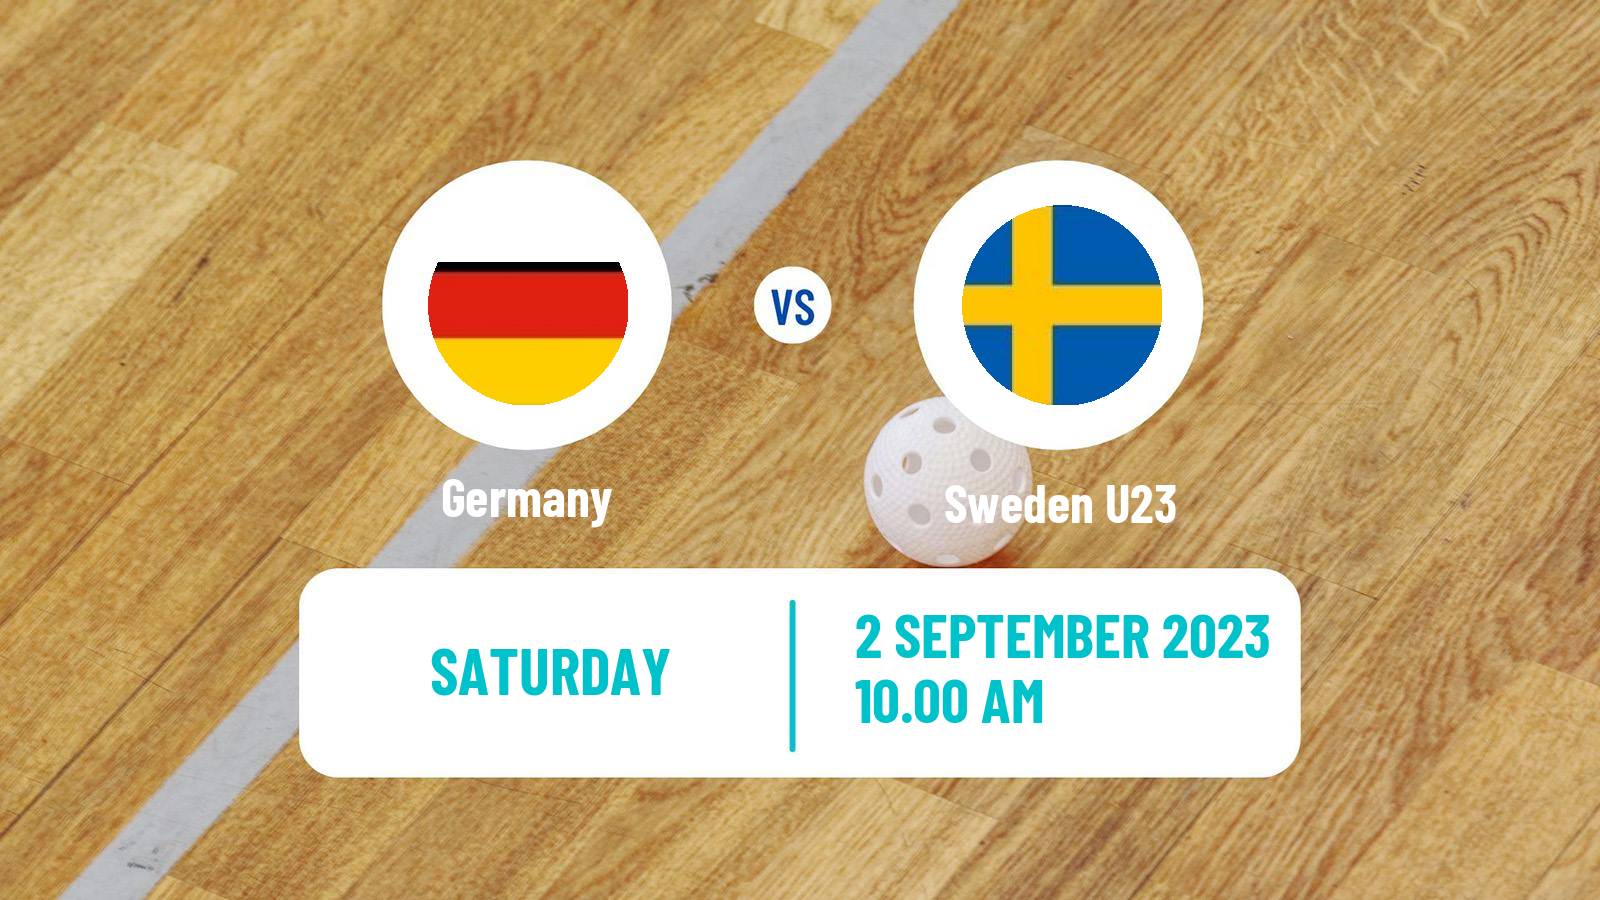 Floorball Friendly International Floorball Germany - Sweden U23